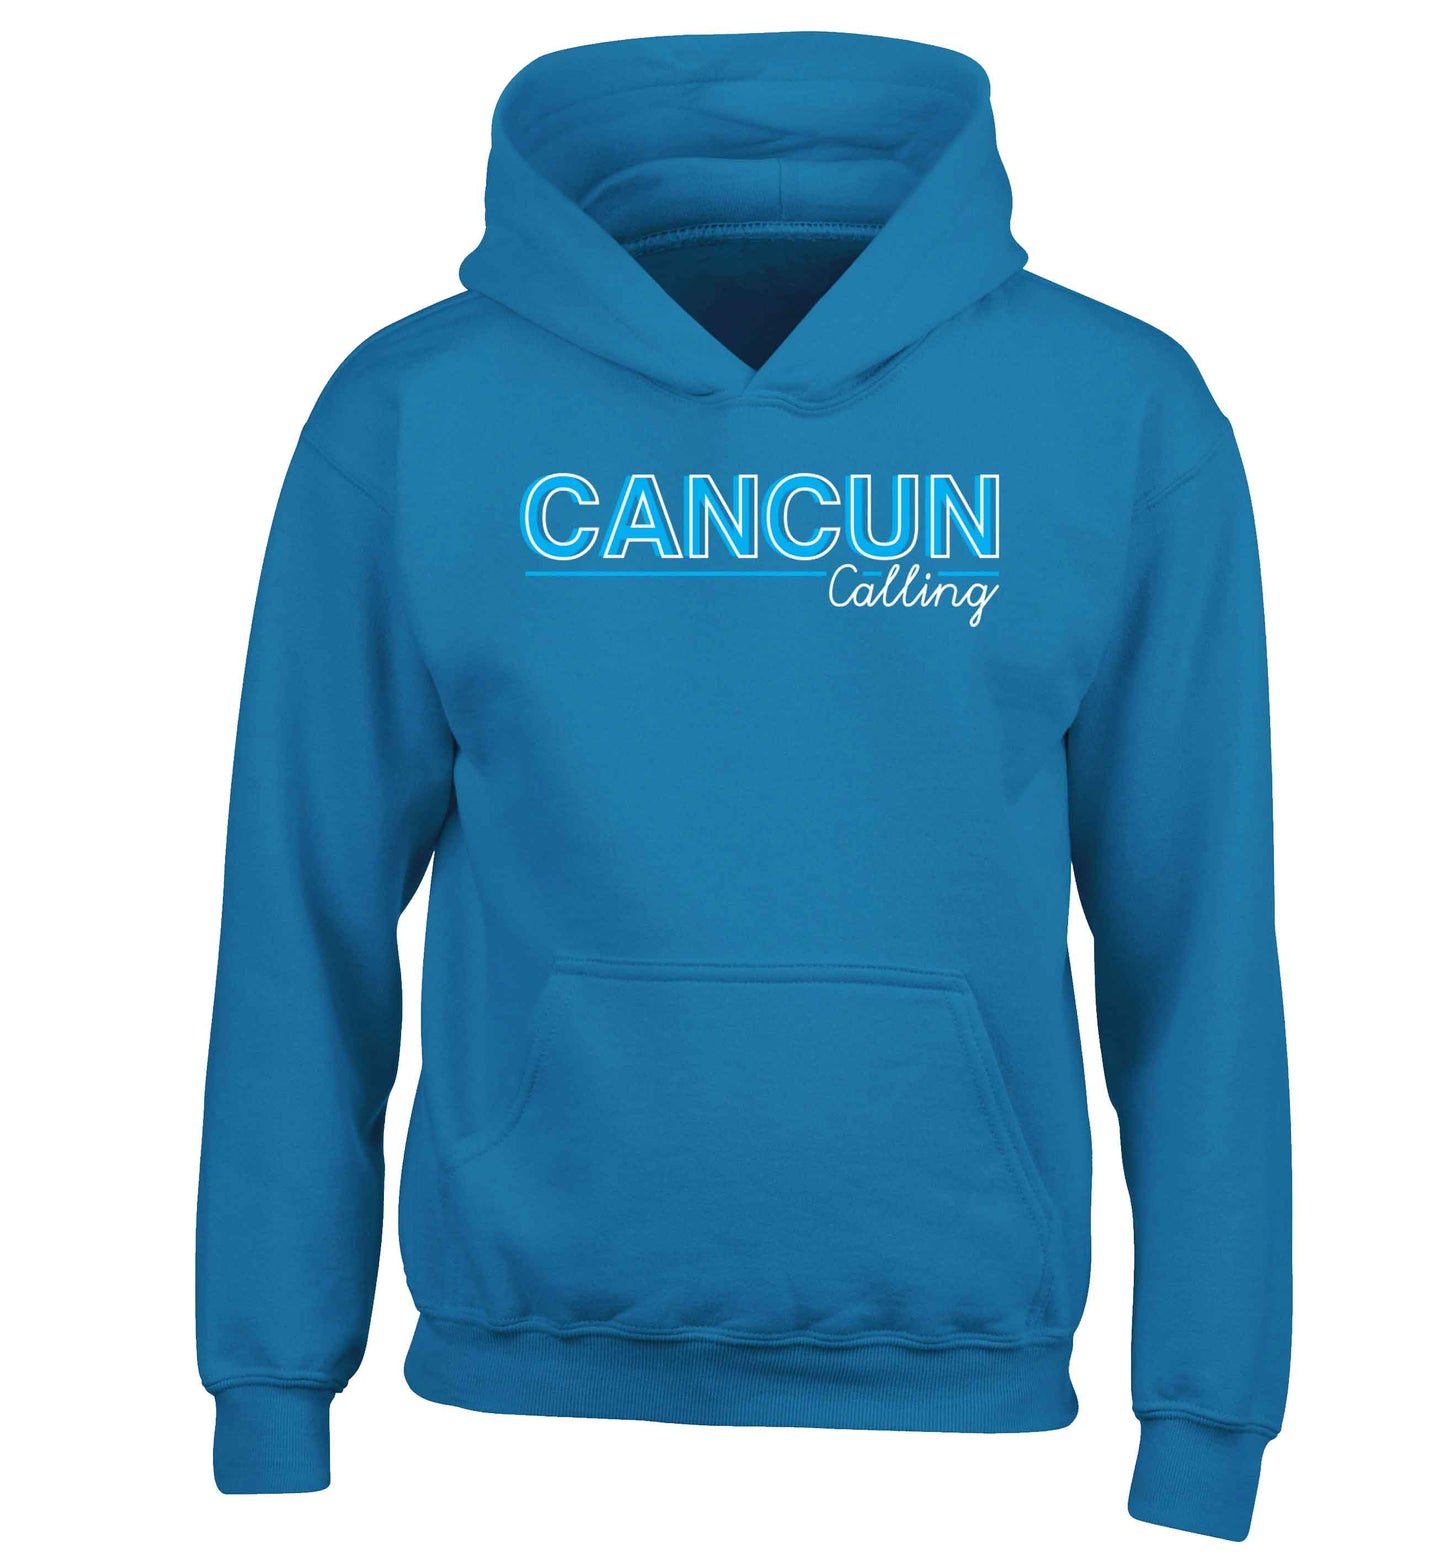 Cancun calling children's blue hoodie 12-13 Years